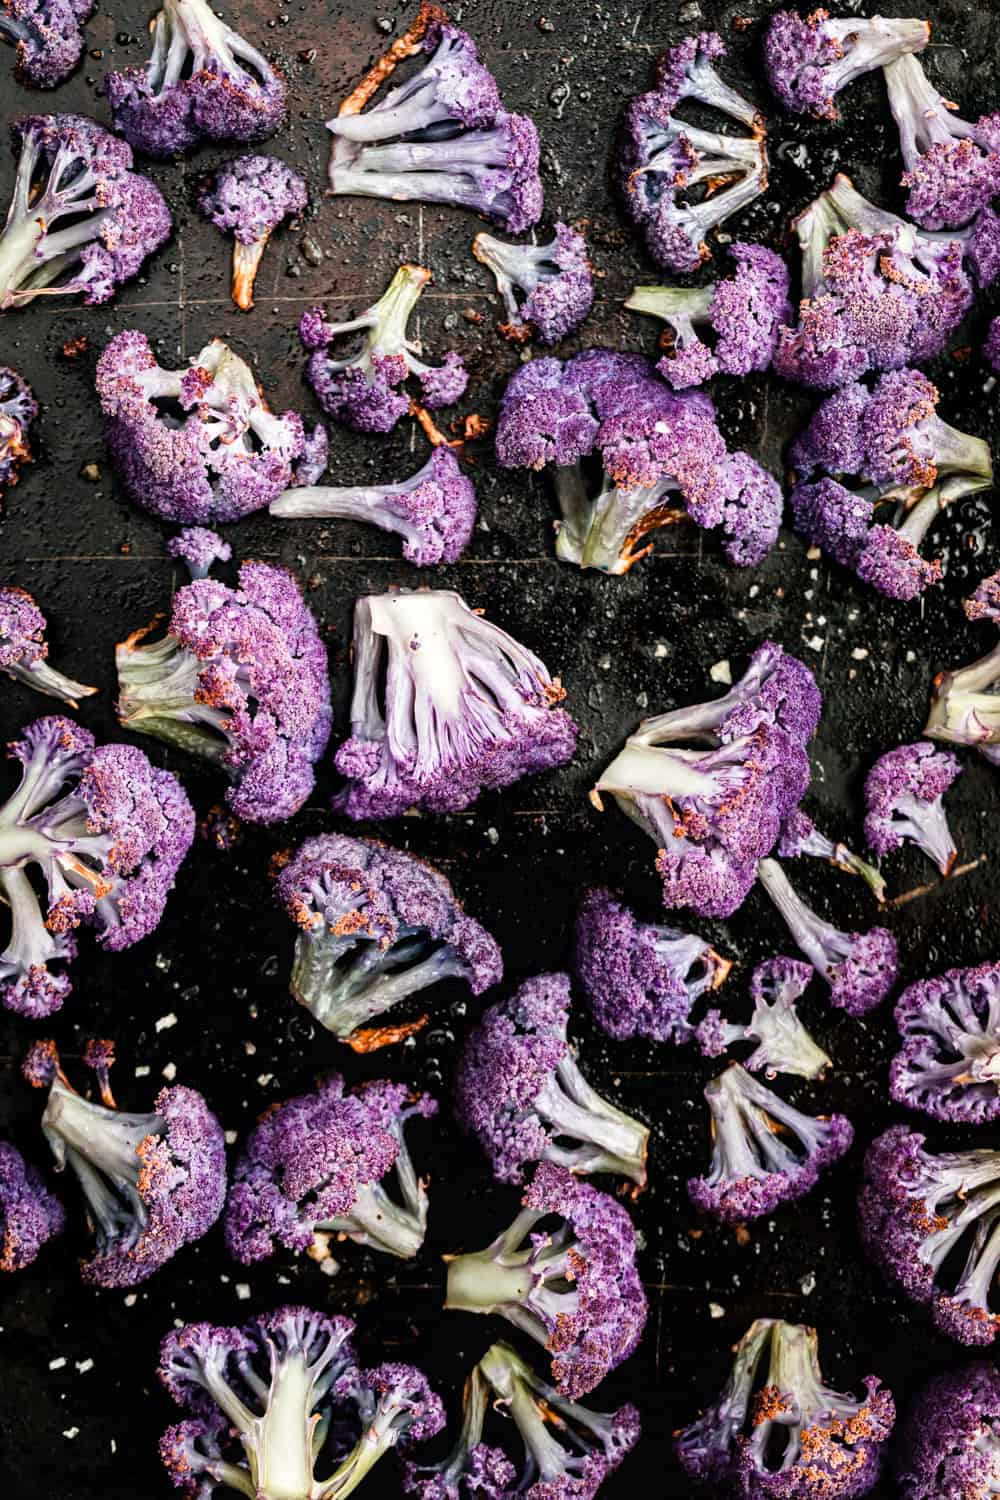 roasted purple cauliflower florets, on a black baking sheet, overhead